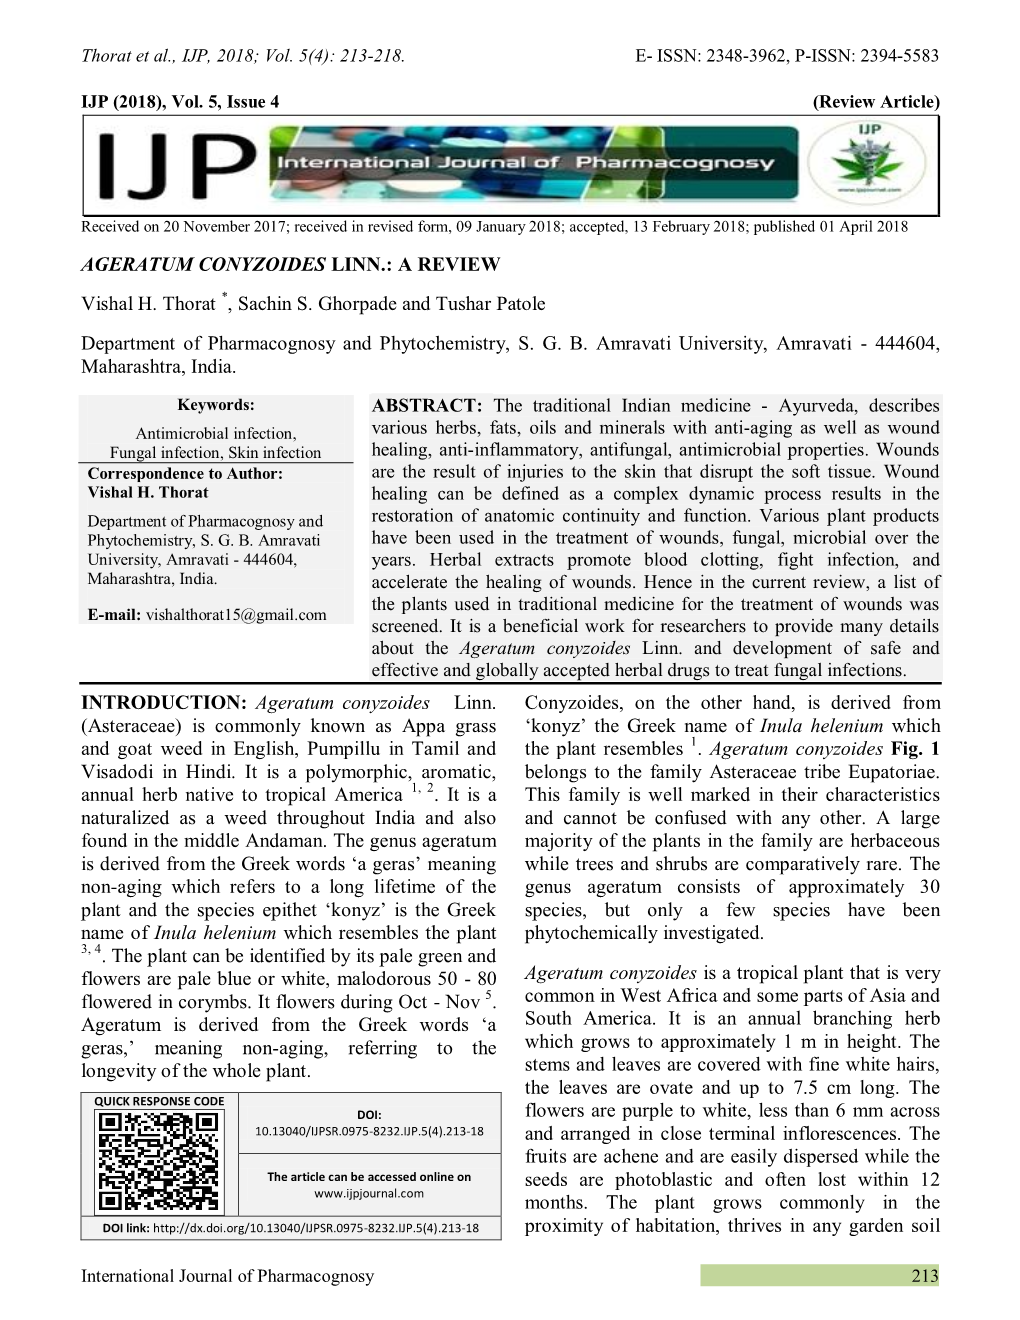 IJPSR (2009), Issue 1